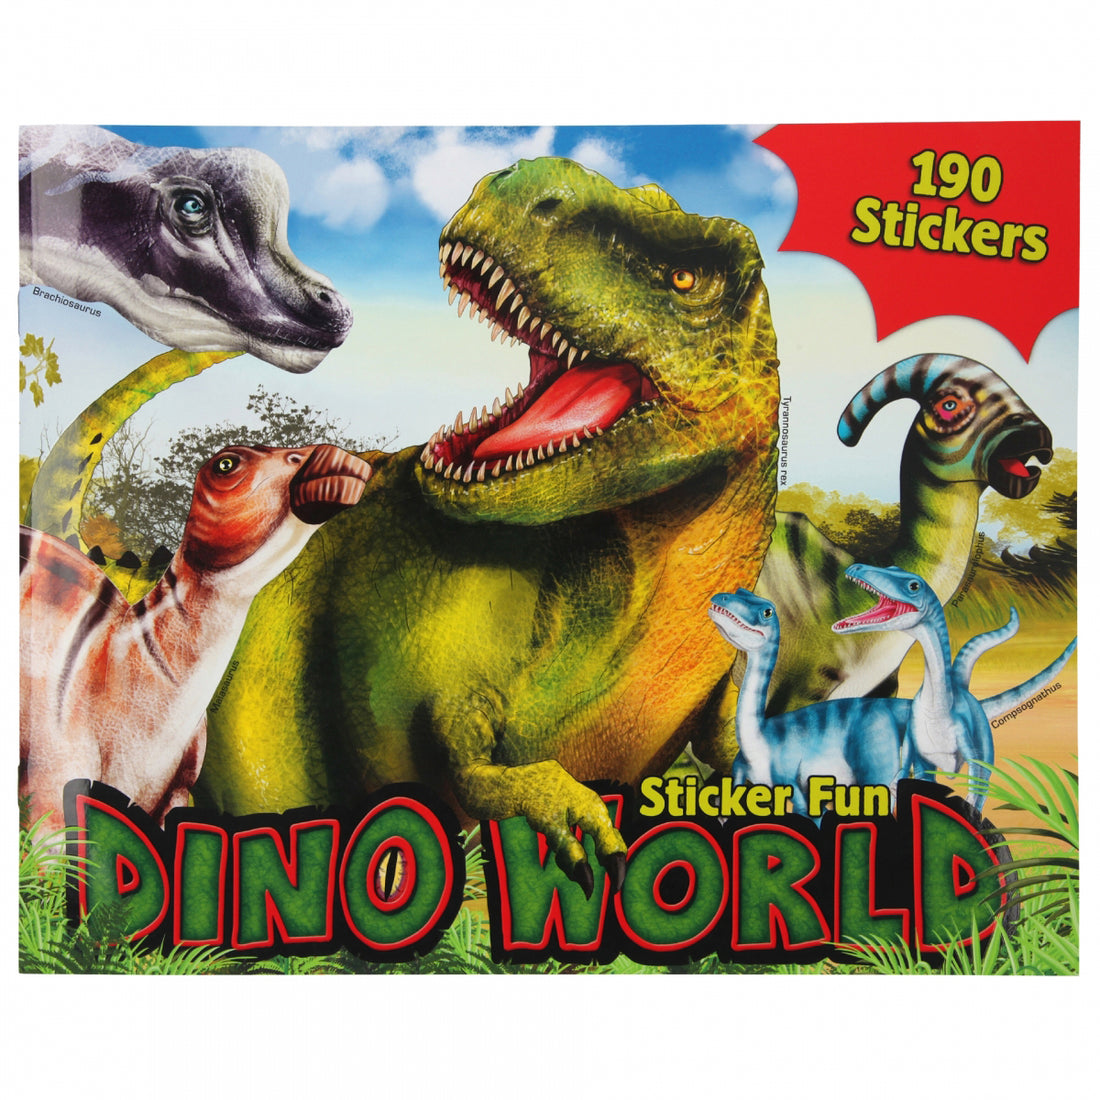 depesche-dino-world-sticker-fun-190-stickers- (1)